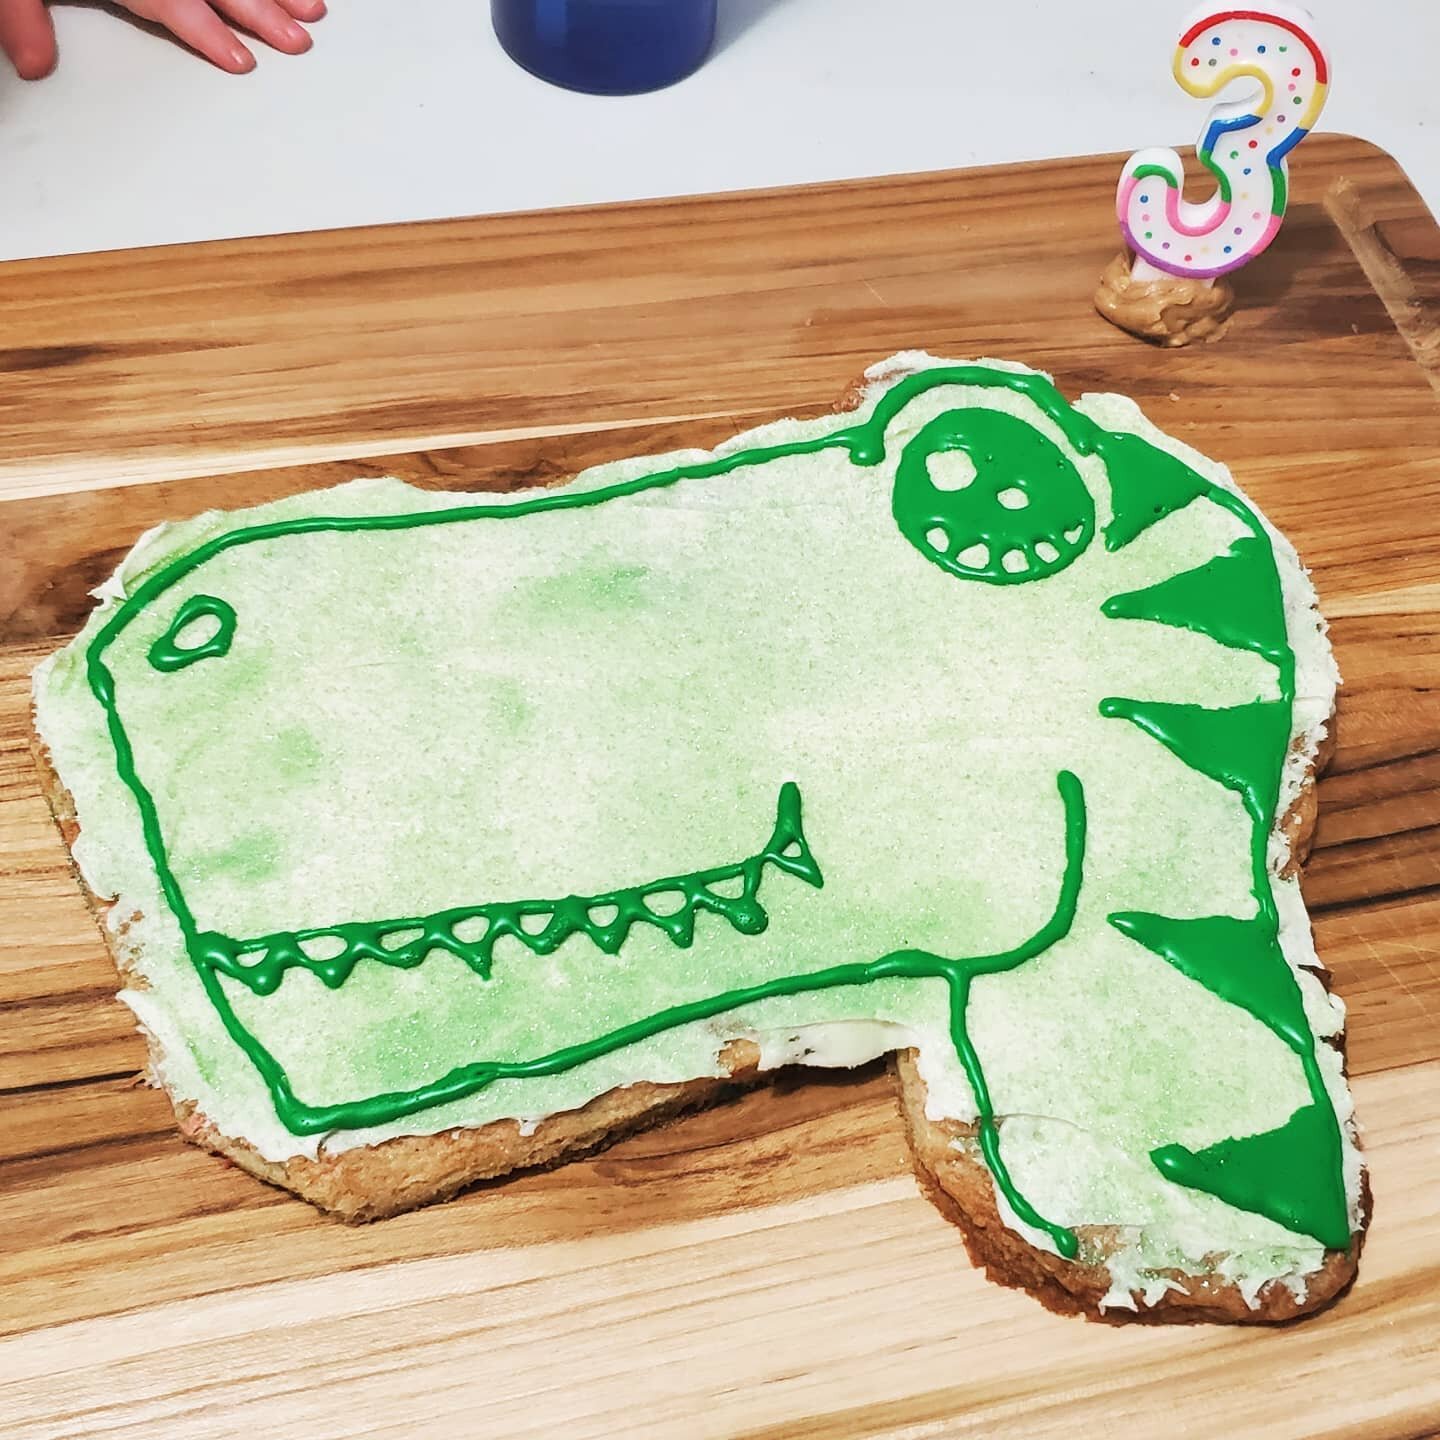 I am an artiste 😆🎨! Happy 3rd #birthday, William!!
.
#homemade #dinosaur #cookie